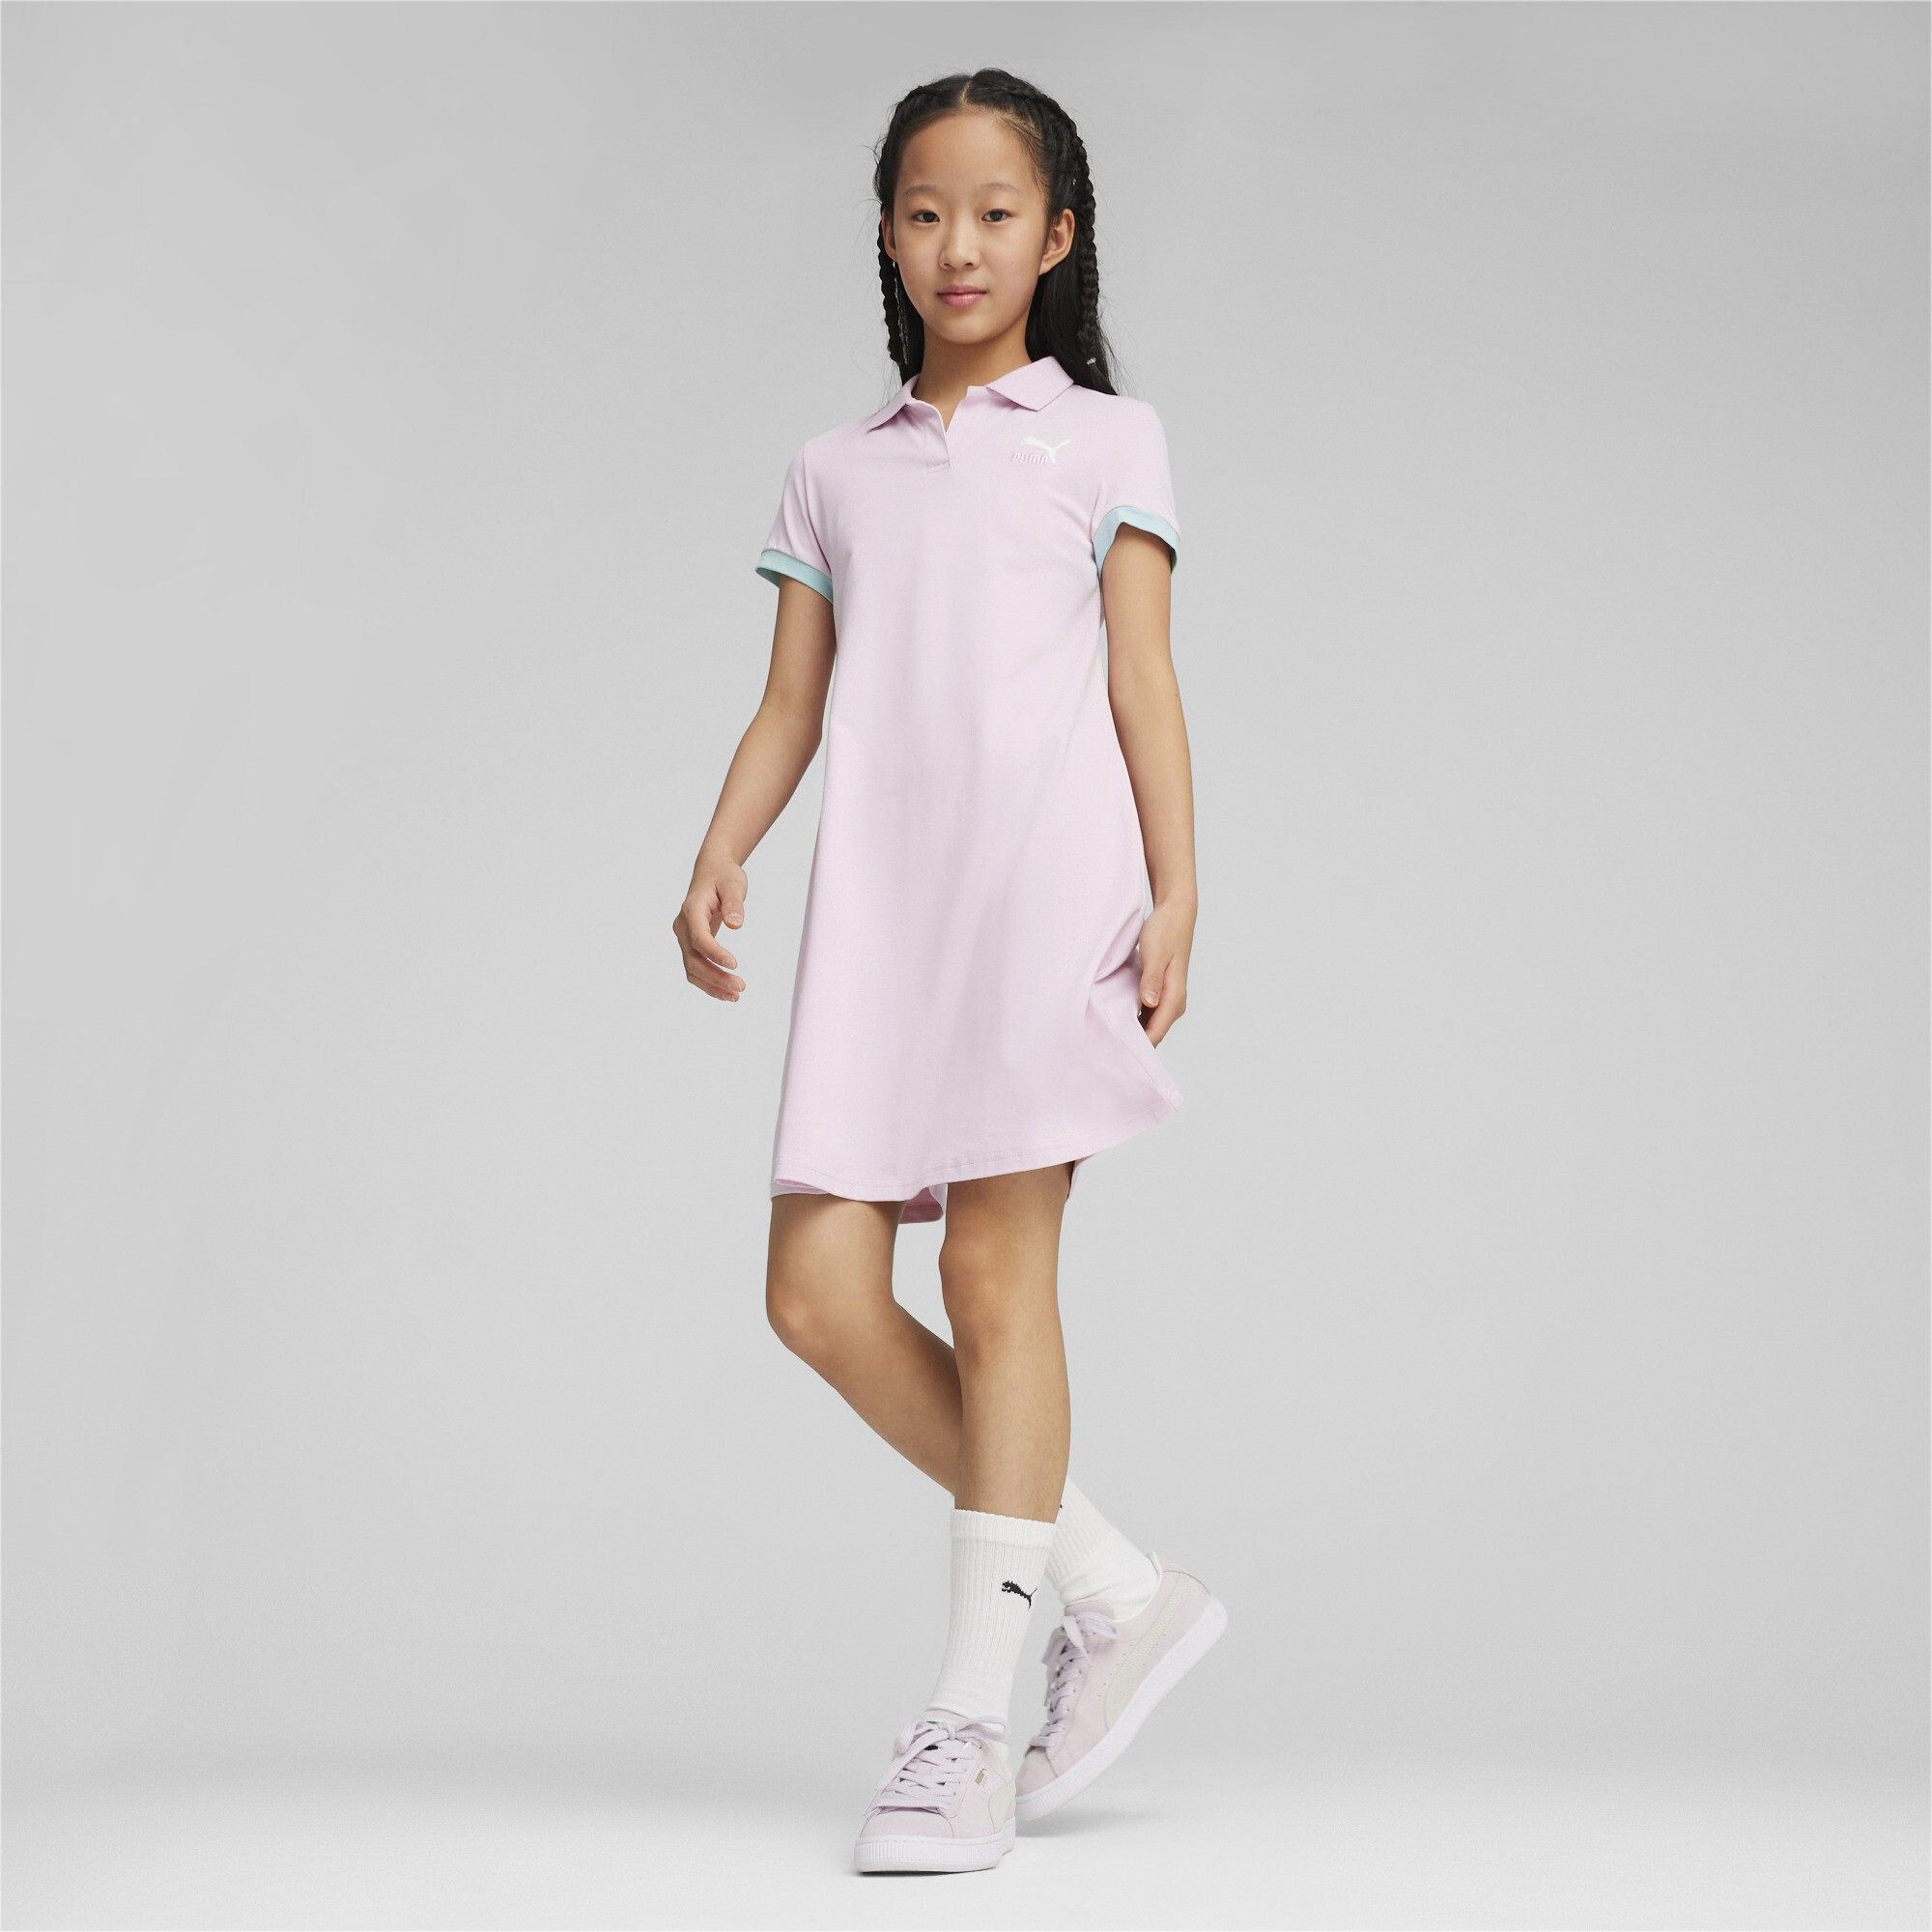 PUMA CLASSICS Match Point Dress In 90 - Purple, Size 9-10 Youth